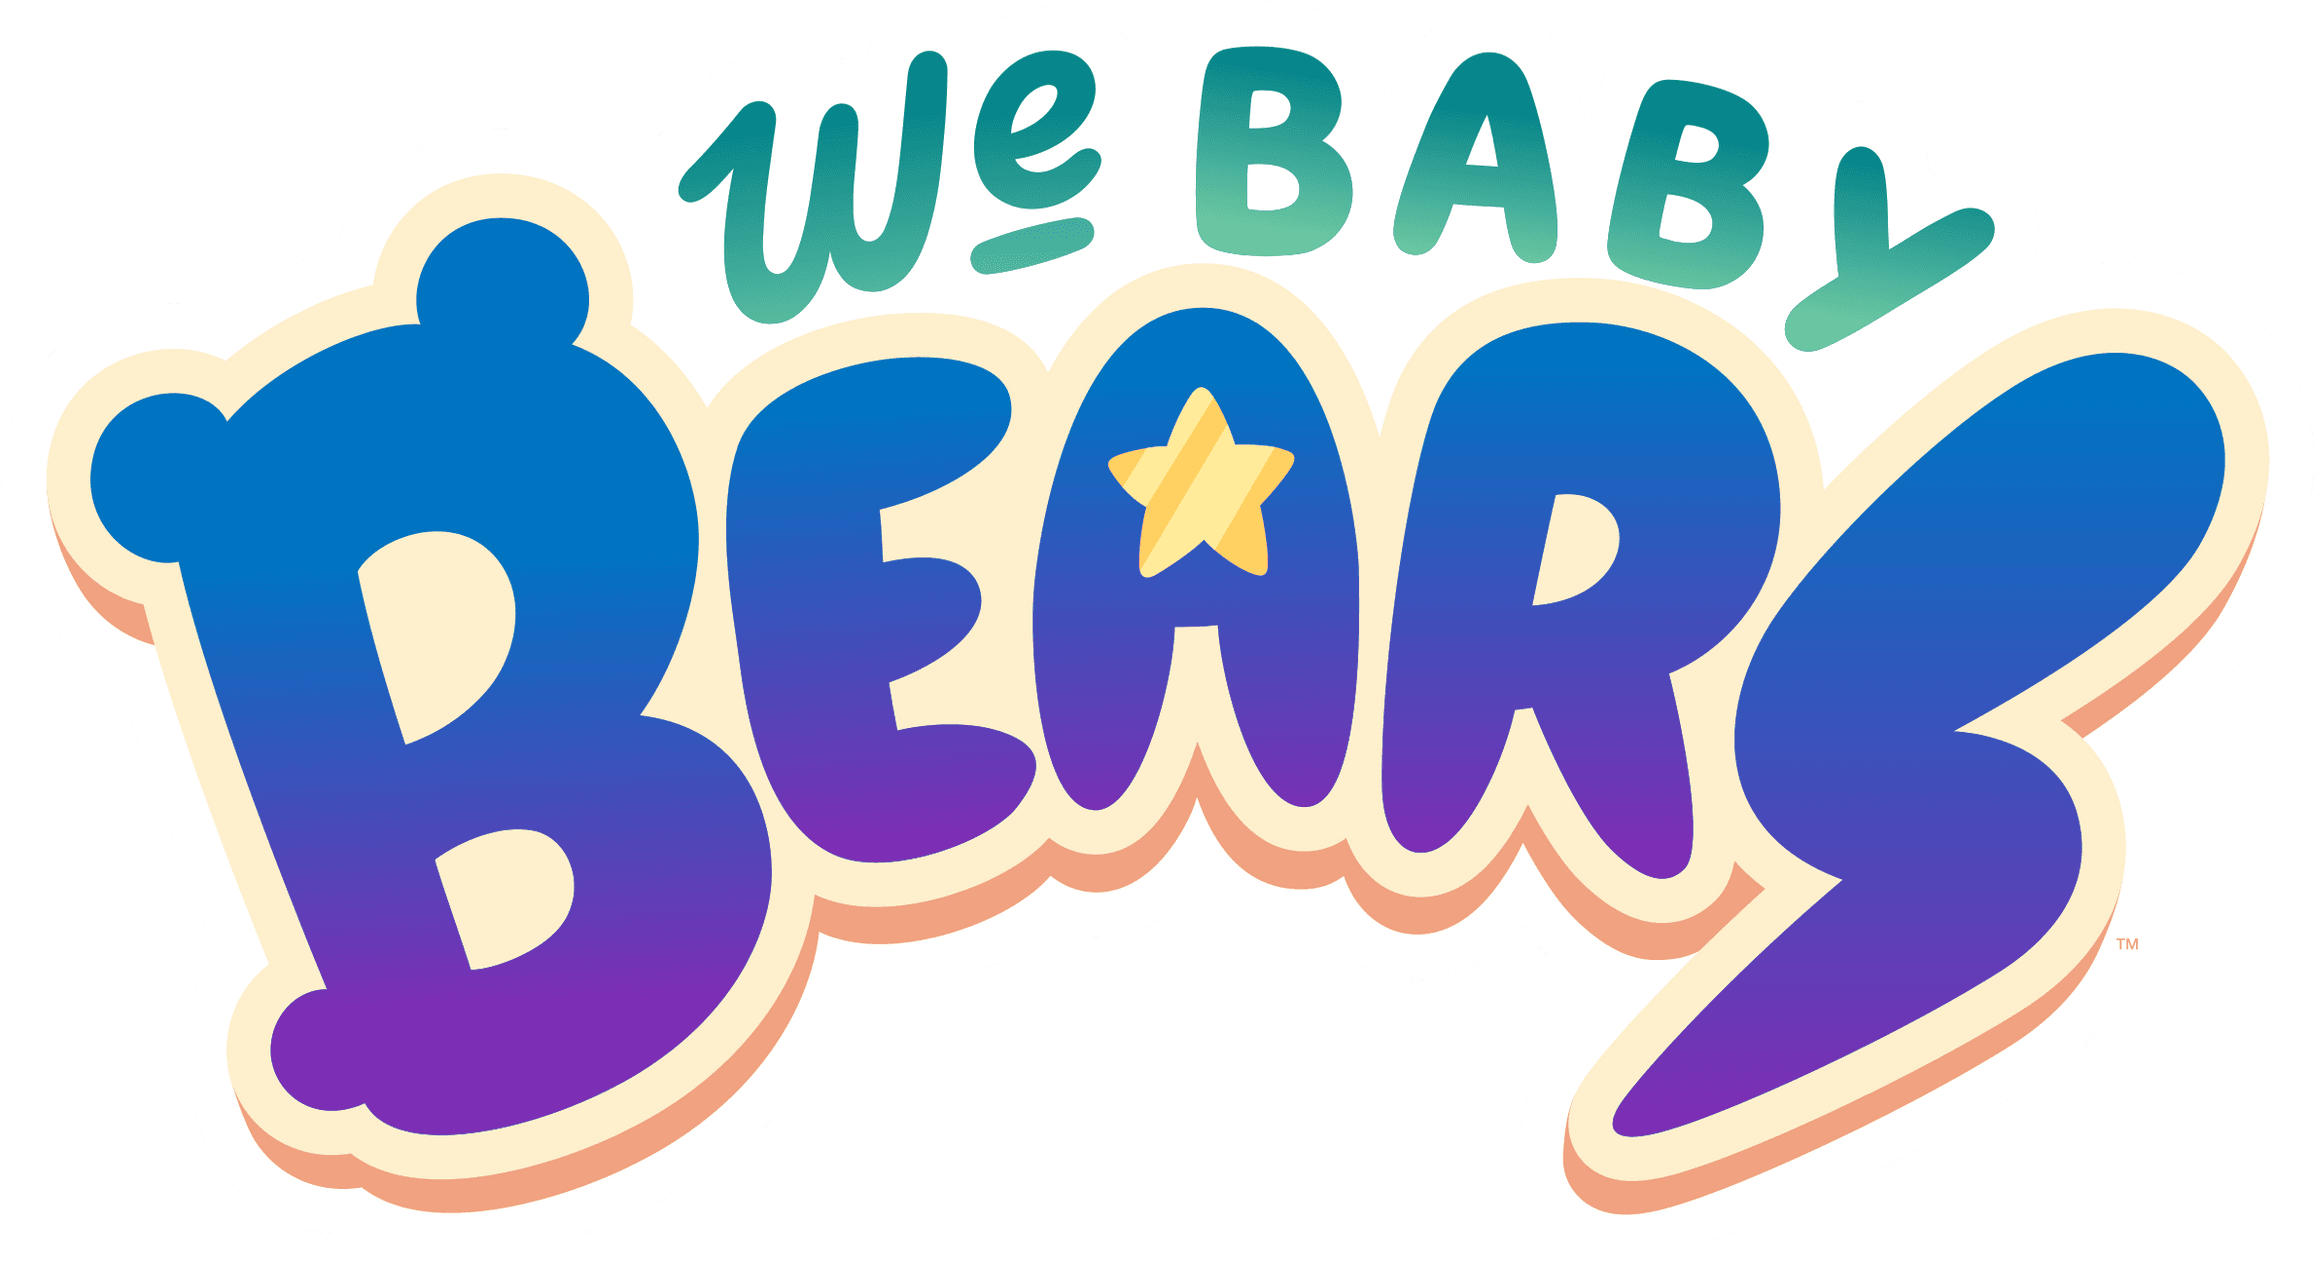 We Baby Bears logo